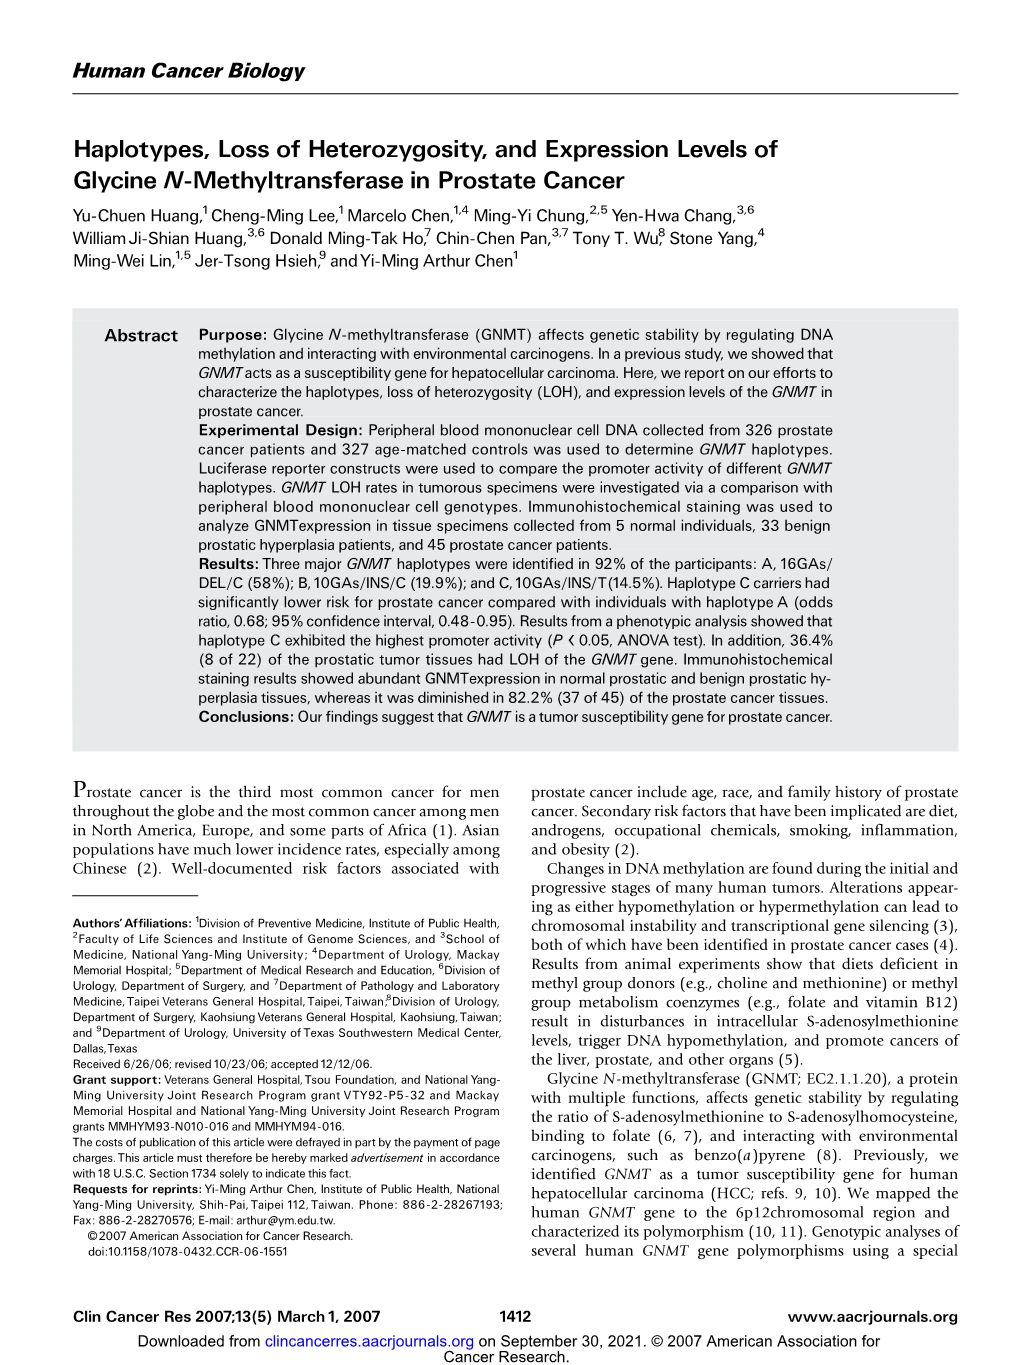 Haplotypes, Loss of Heterozygosity, and Expression Levels of Glycine N-Methyltransferase in Prostate Cancer